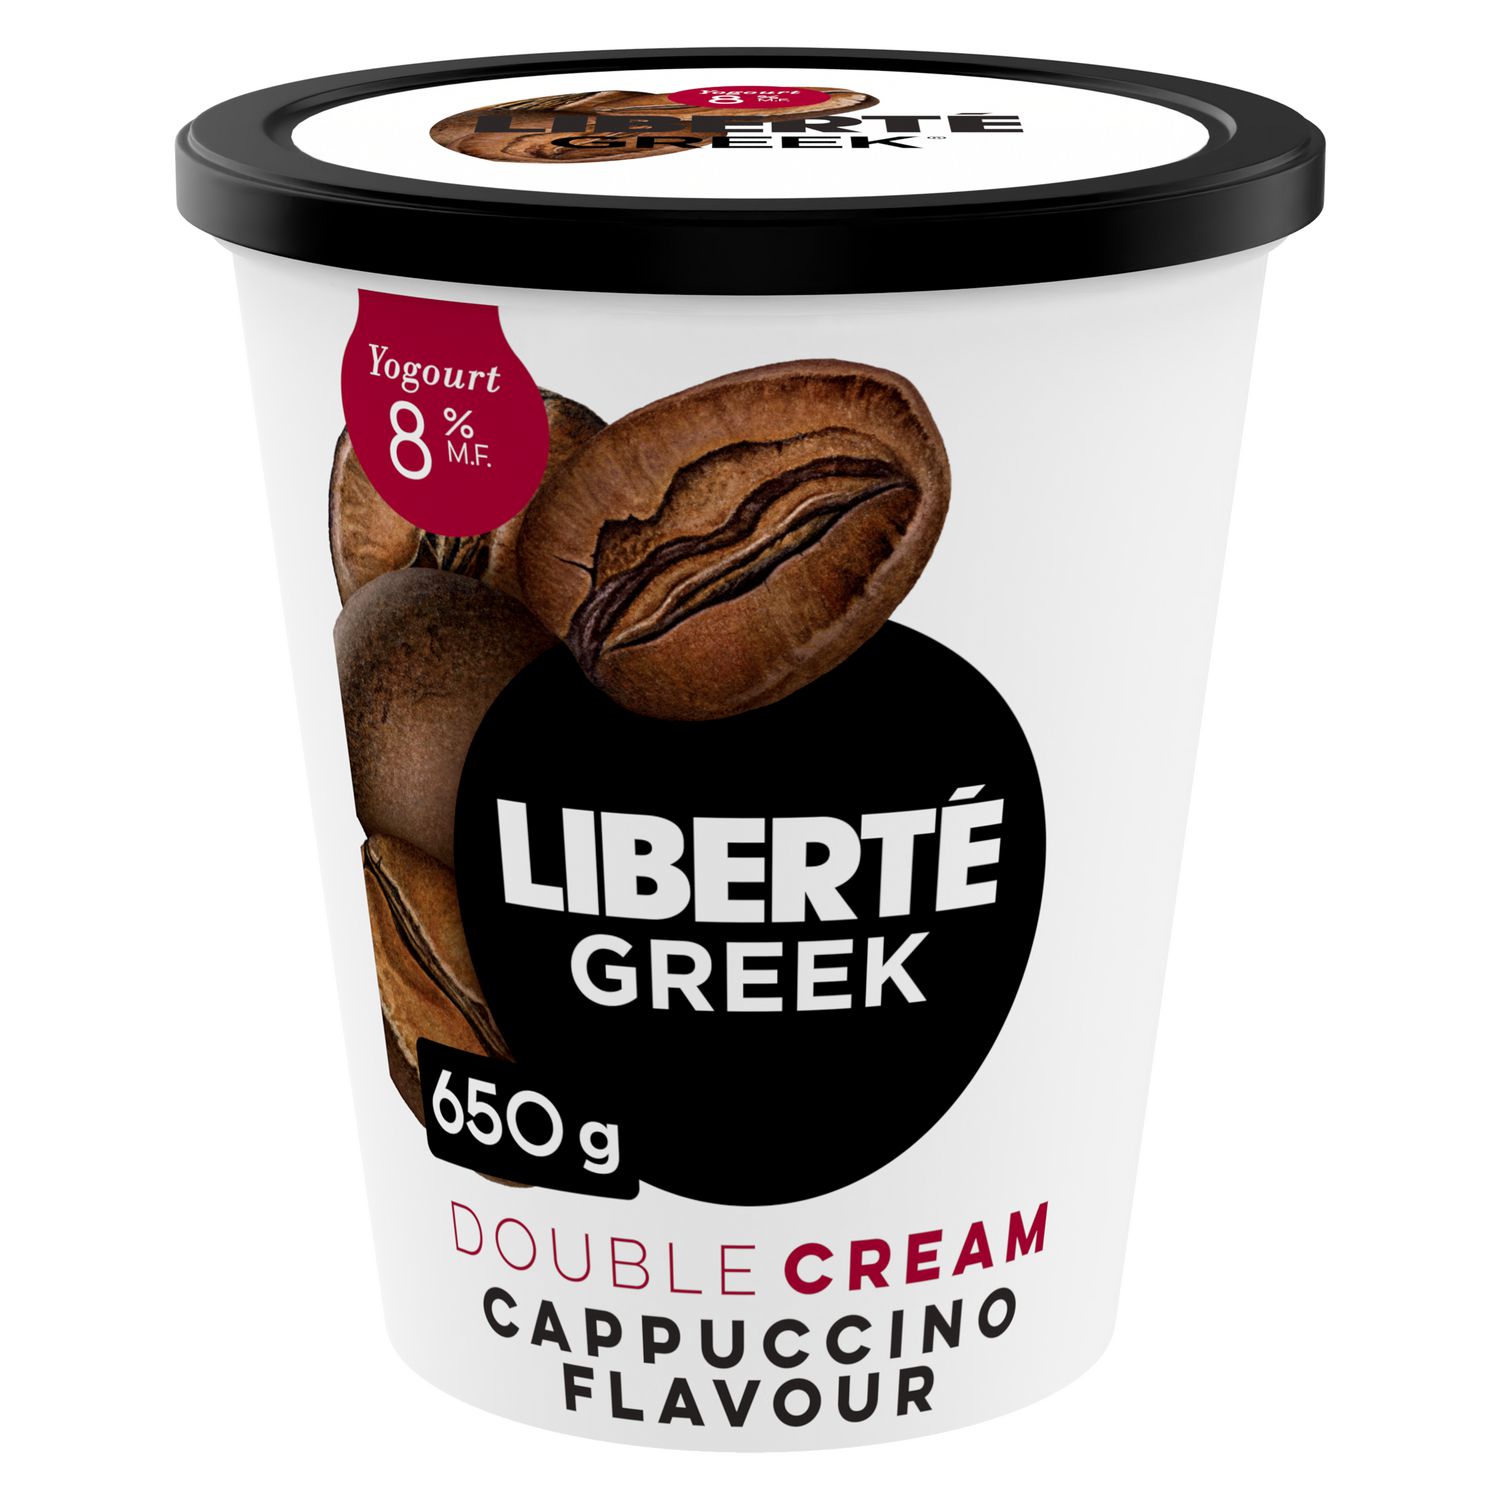 Liberté Greek Double Cream Cappuccino Flavour 8% M.F. Yogurt | Walmart  Canada